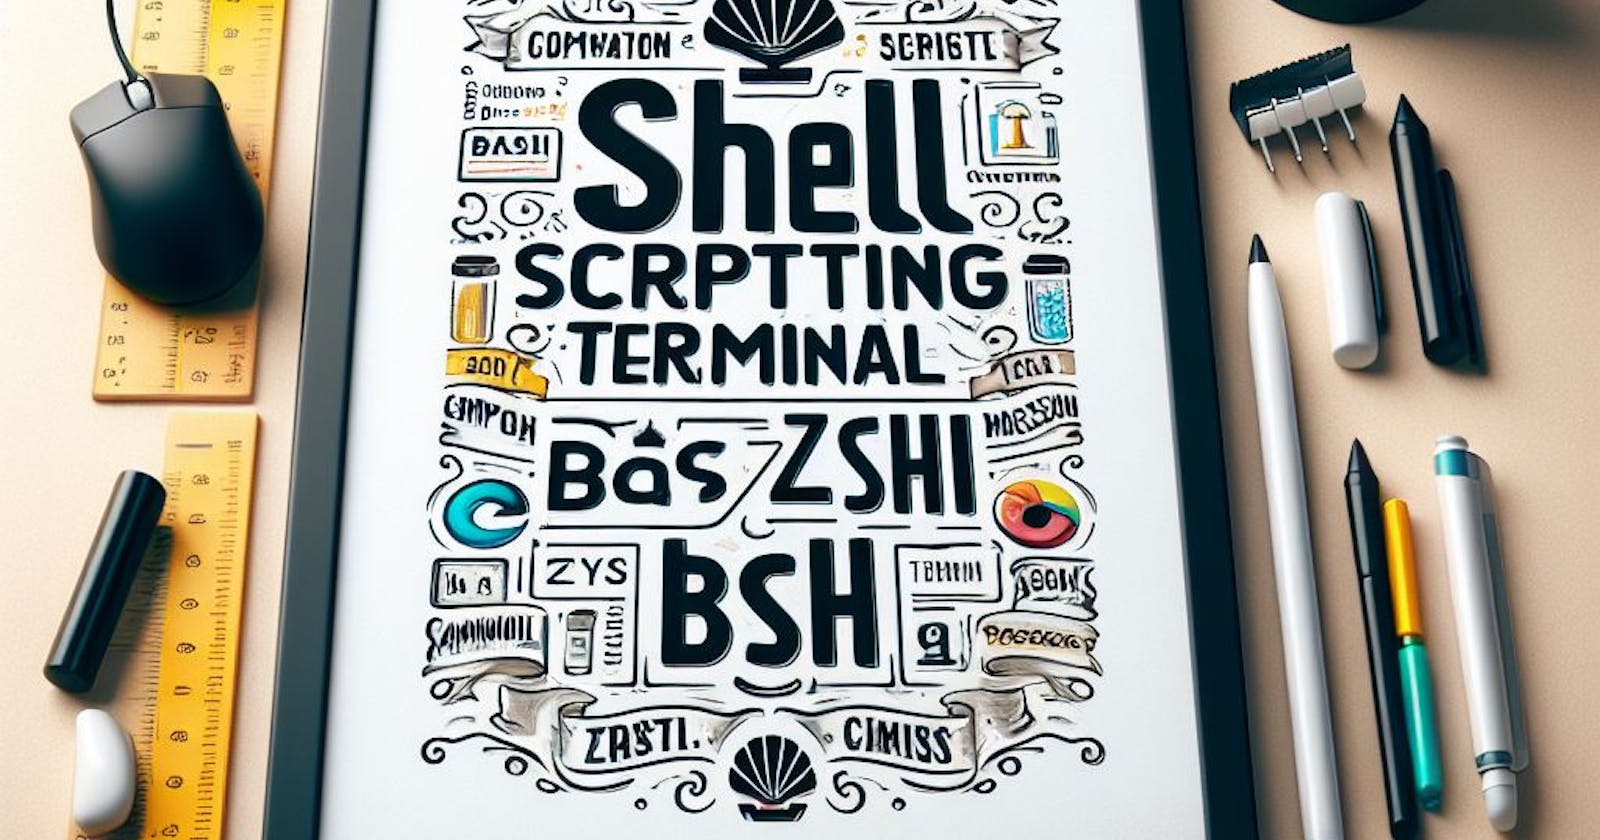 🐚Day 4:  Fundamental of Shell Scripting! 🚀